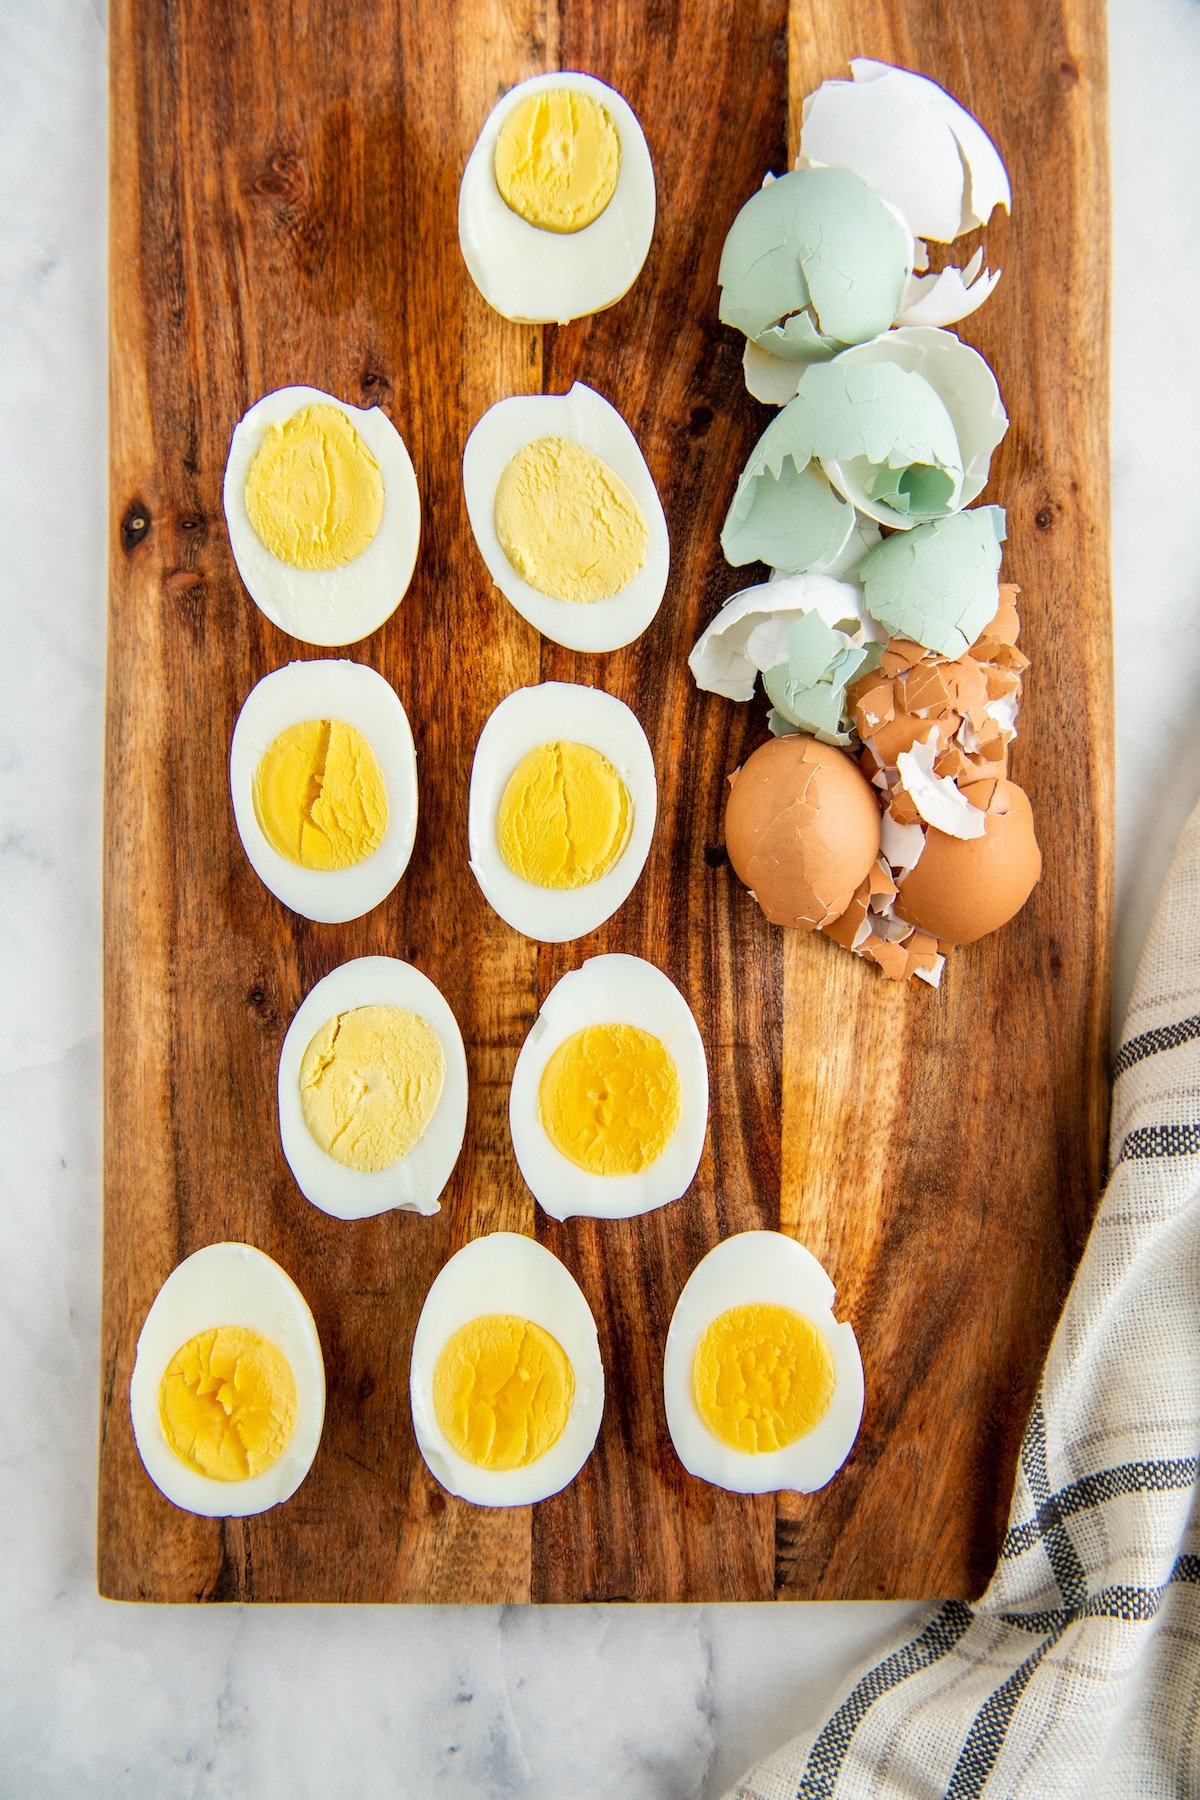 10 peeled eggs sliced in half on a cutting board.